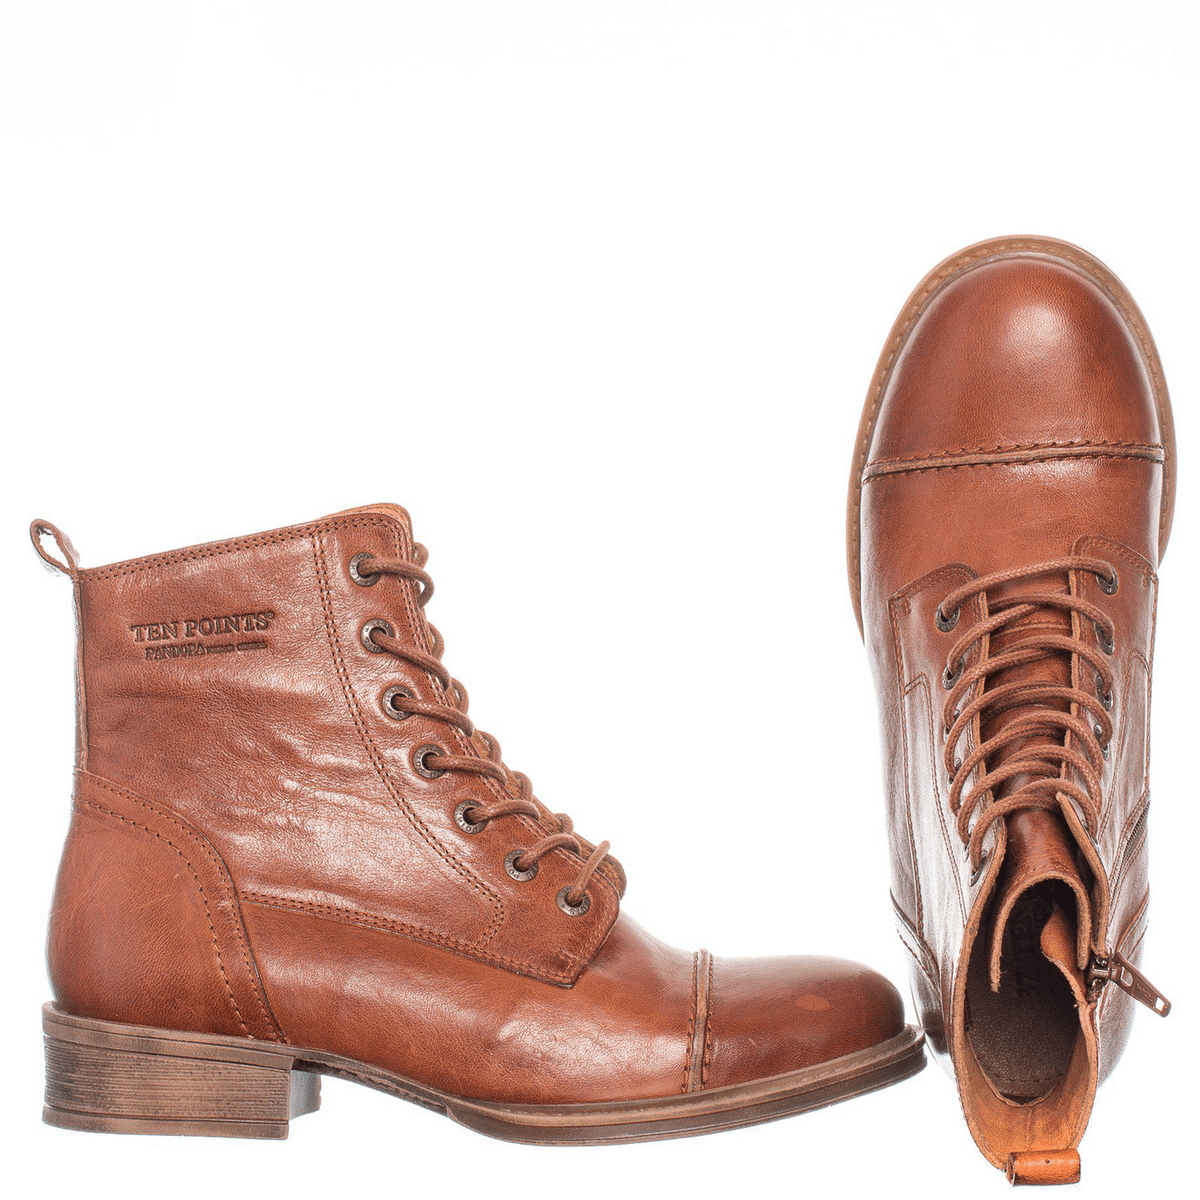 Pandora, classic lace-up boots